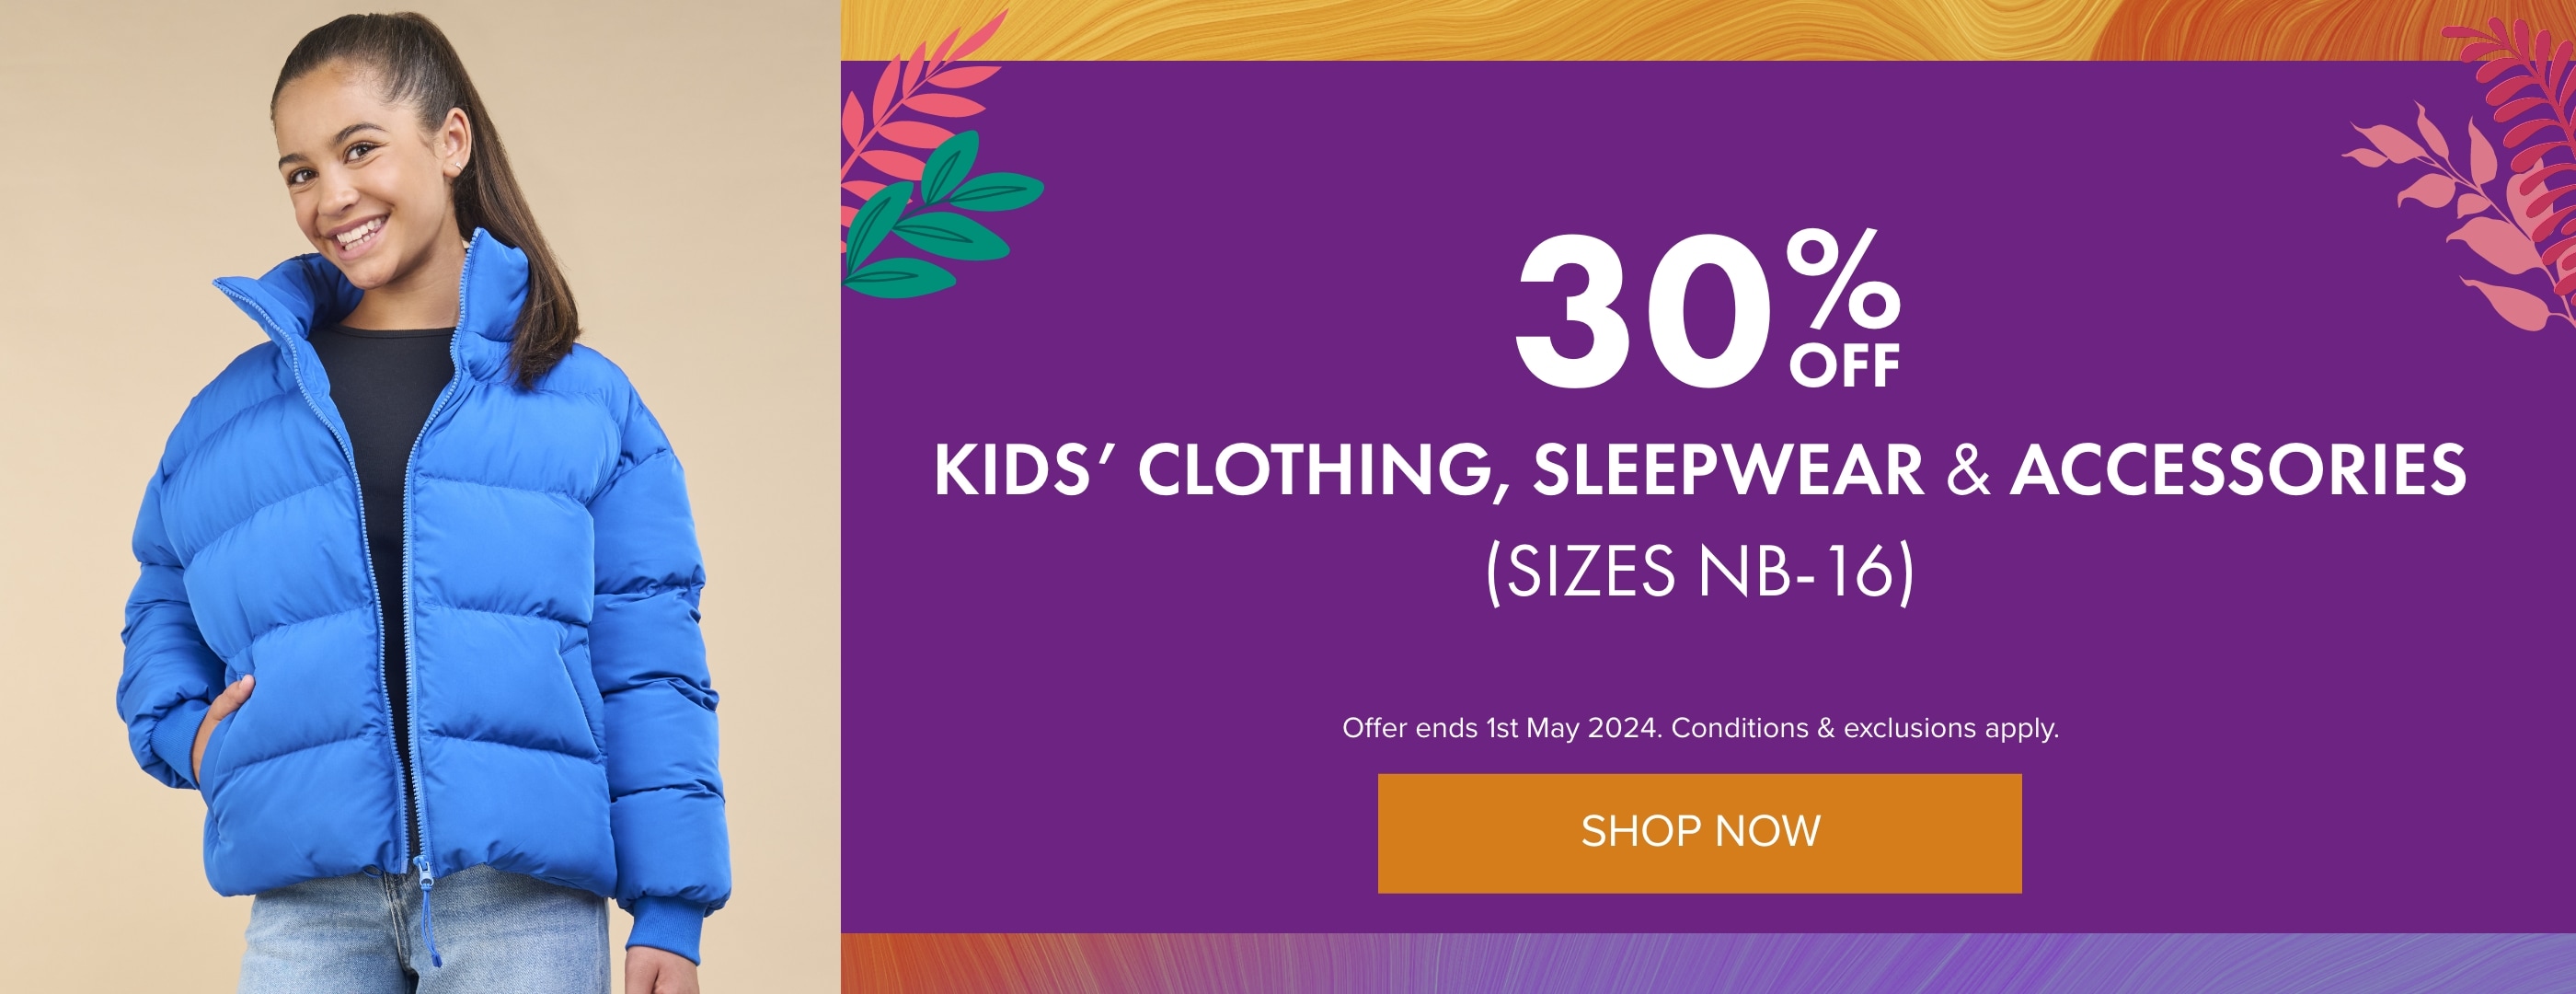 30% OFF Kids' Clothing, Sleepwear & Accessories (Sizes NB-16)